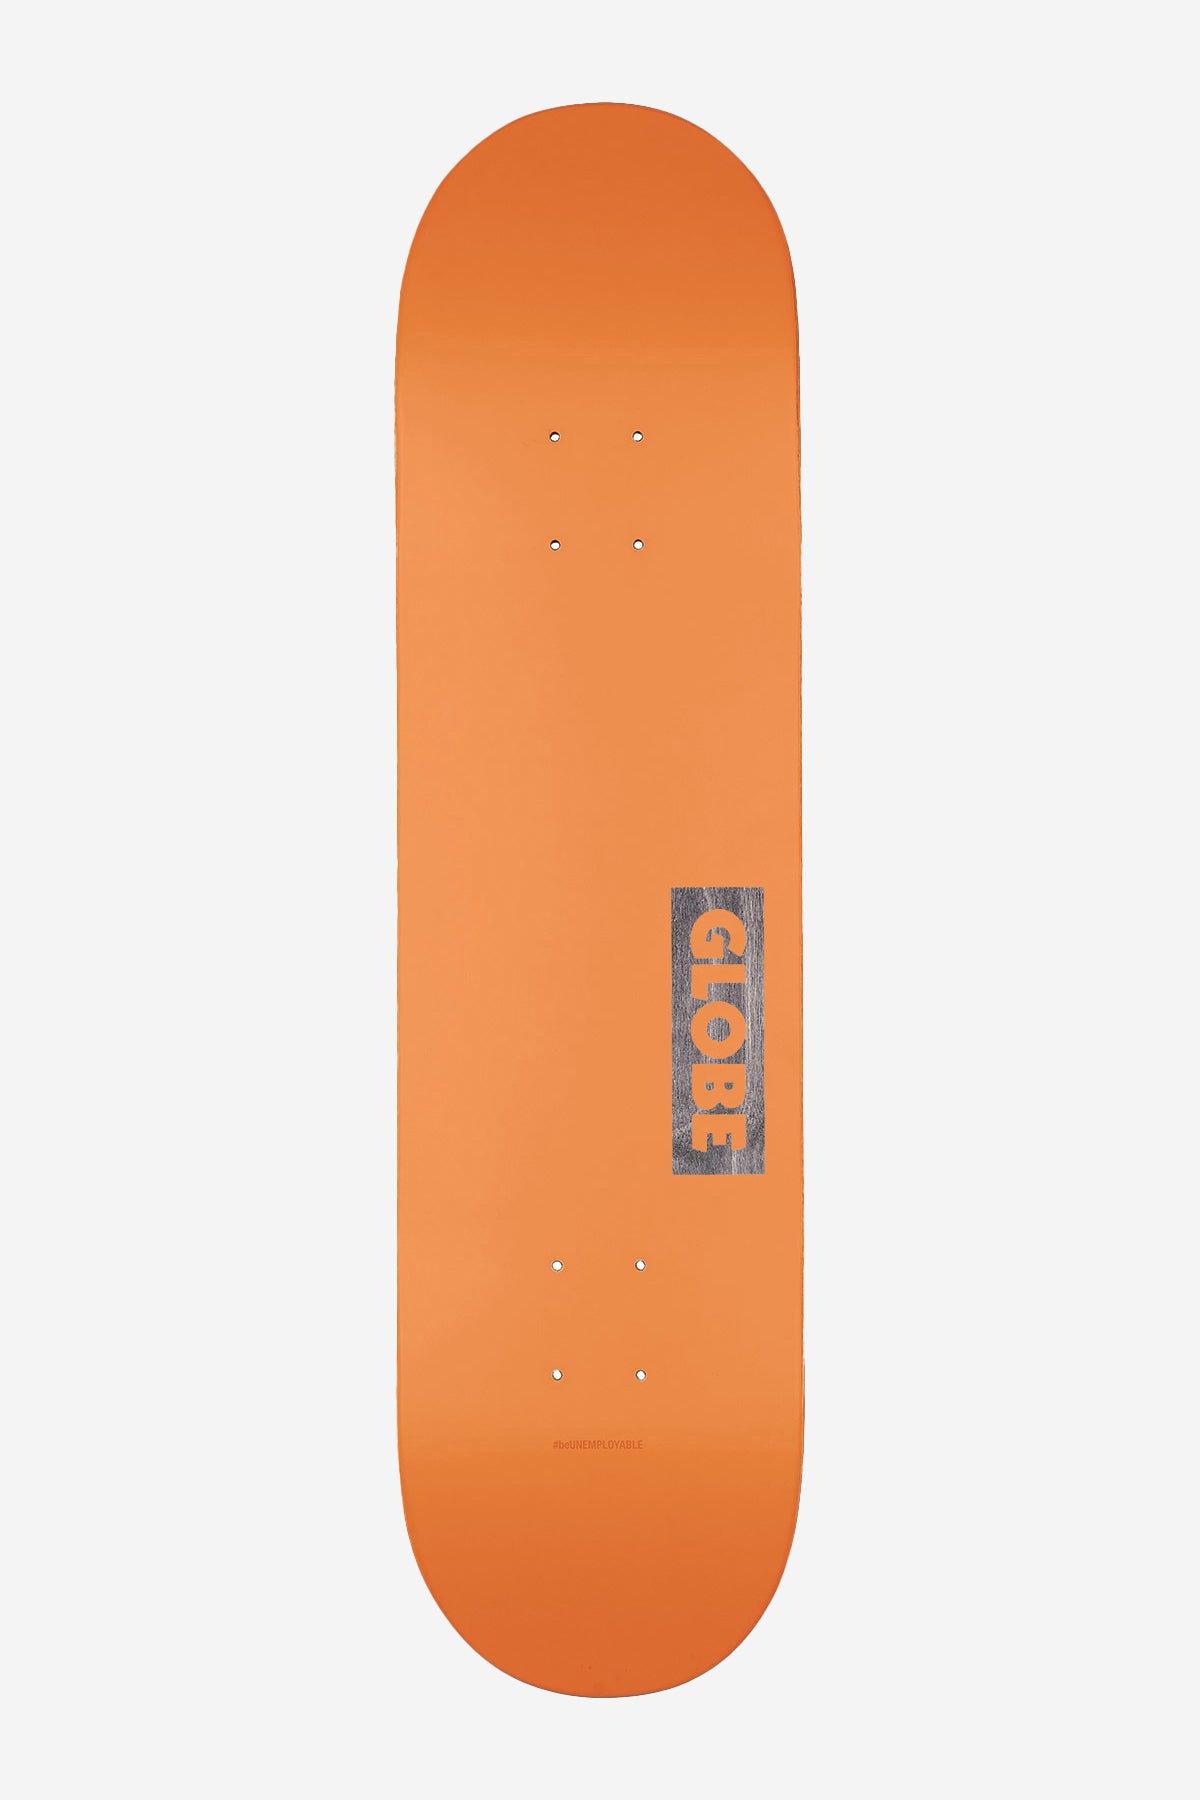 Globe - Goodstock - Neon Orange - 8,125" Skateboard Deck